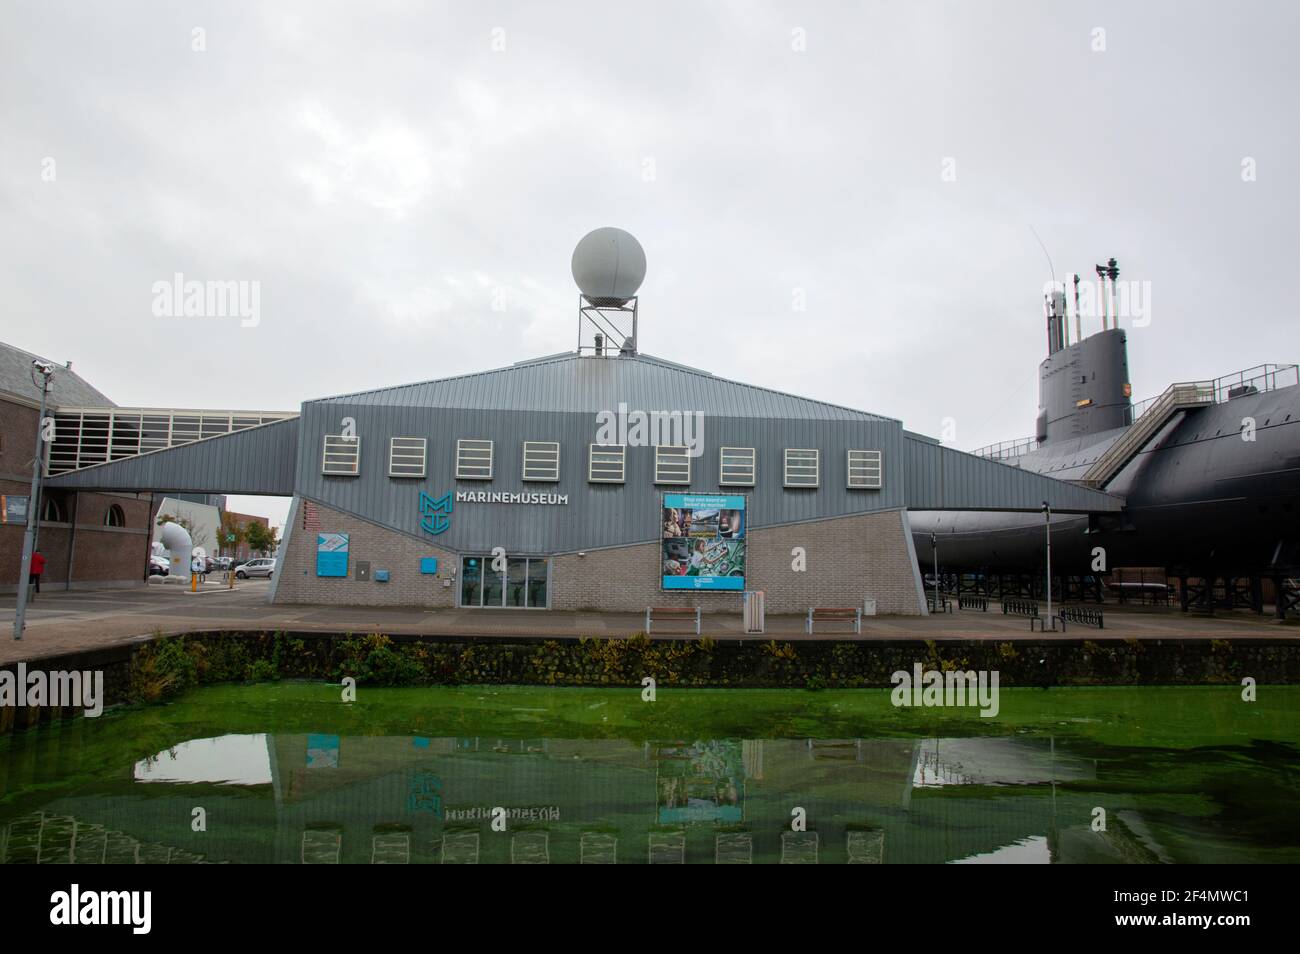 Marinemuseum Building At Den Helder The Netherlands 23-9-2019 Stock Photo